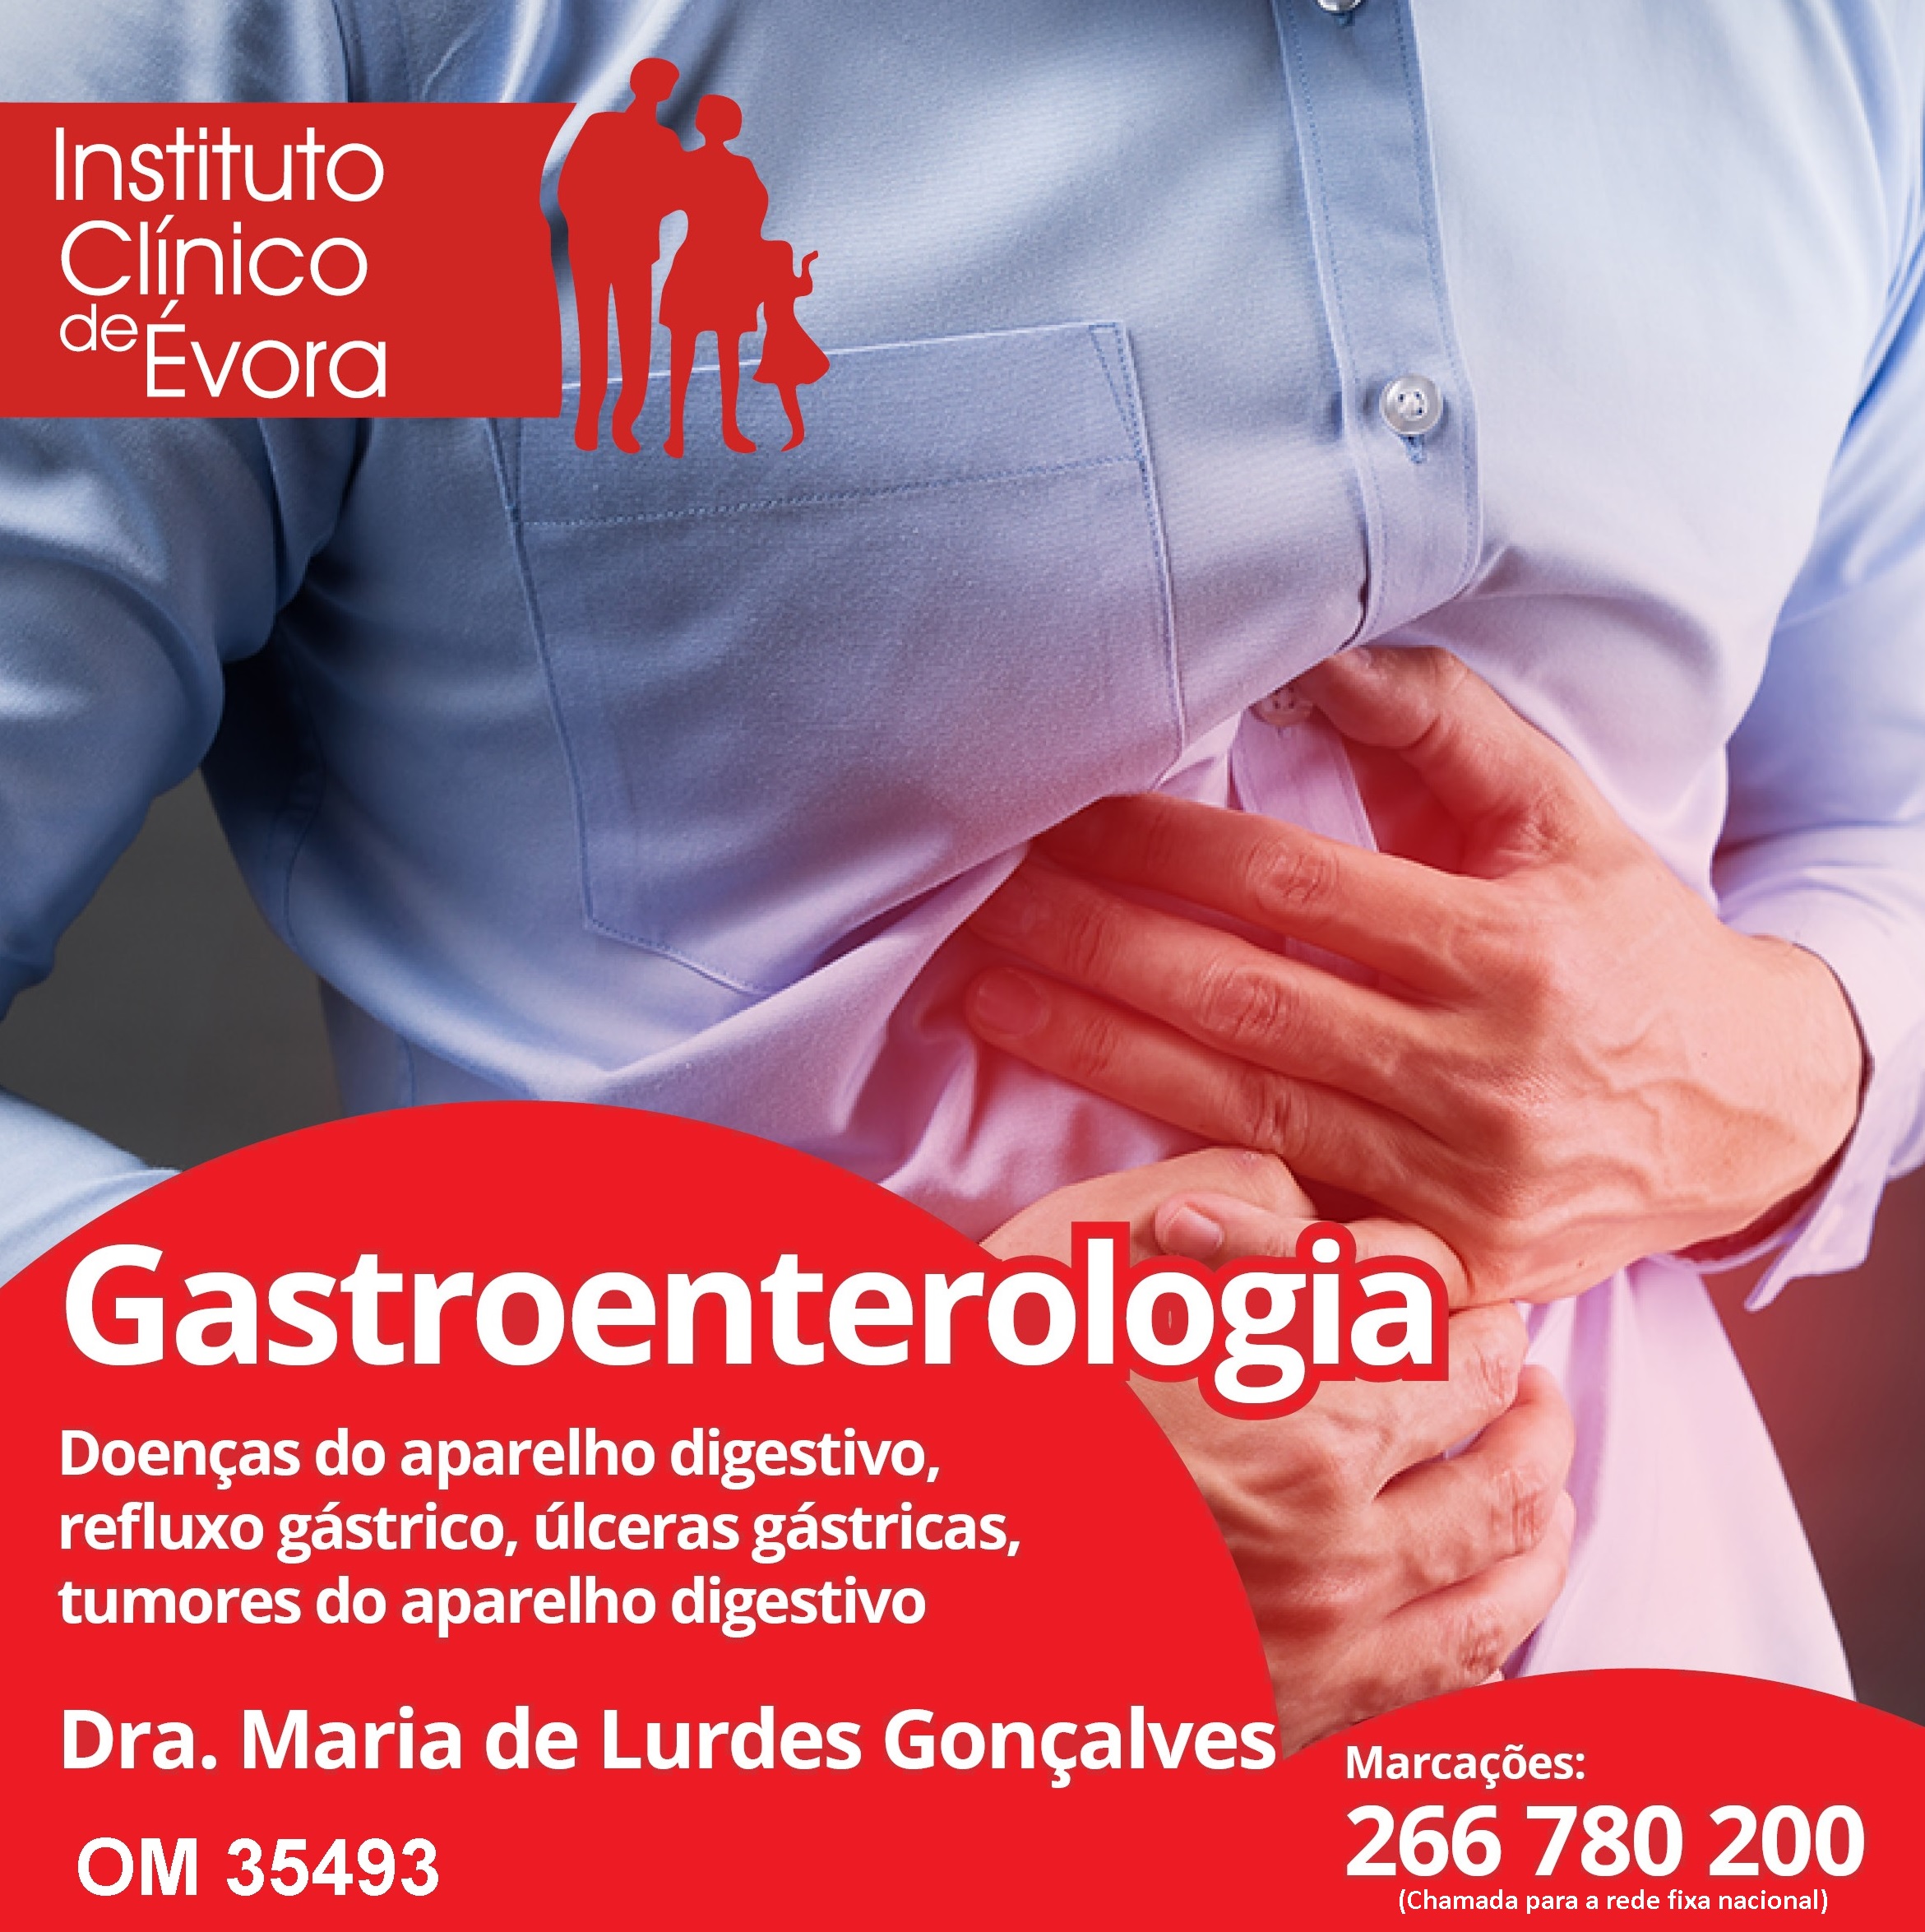 Gastroentereologia